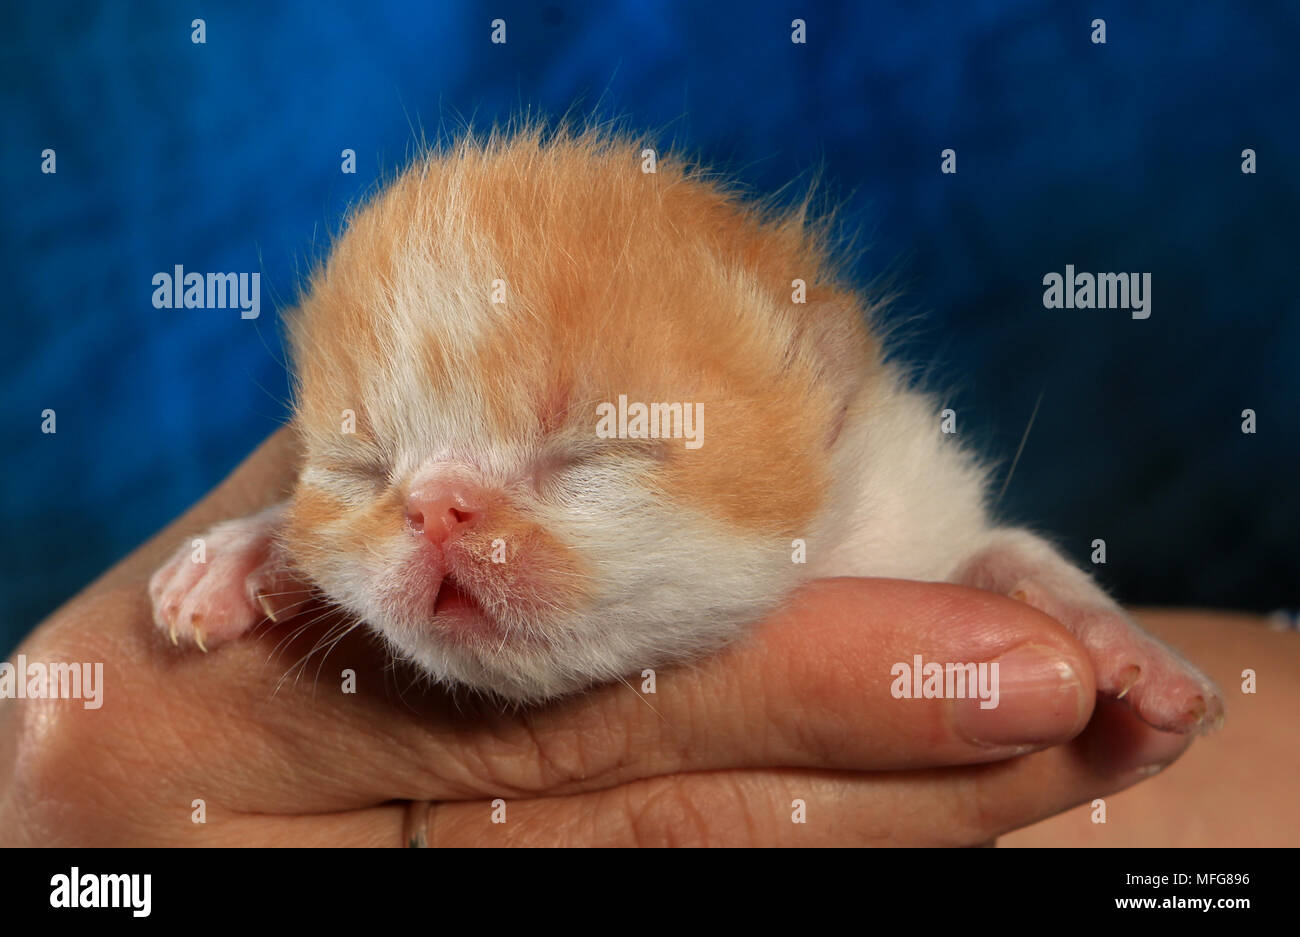 newborn persian kitten, 8 days old, lying in a hand Stock Photo